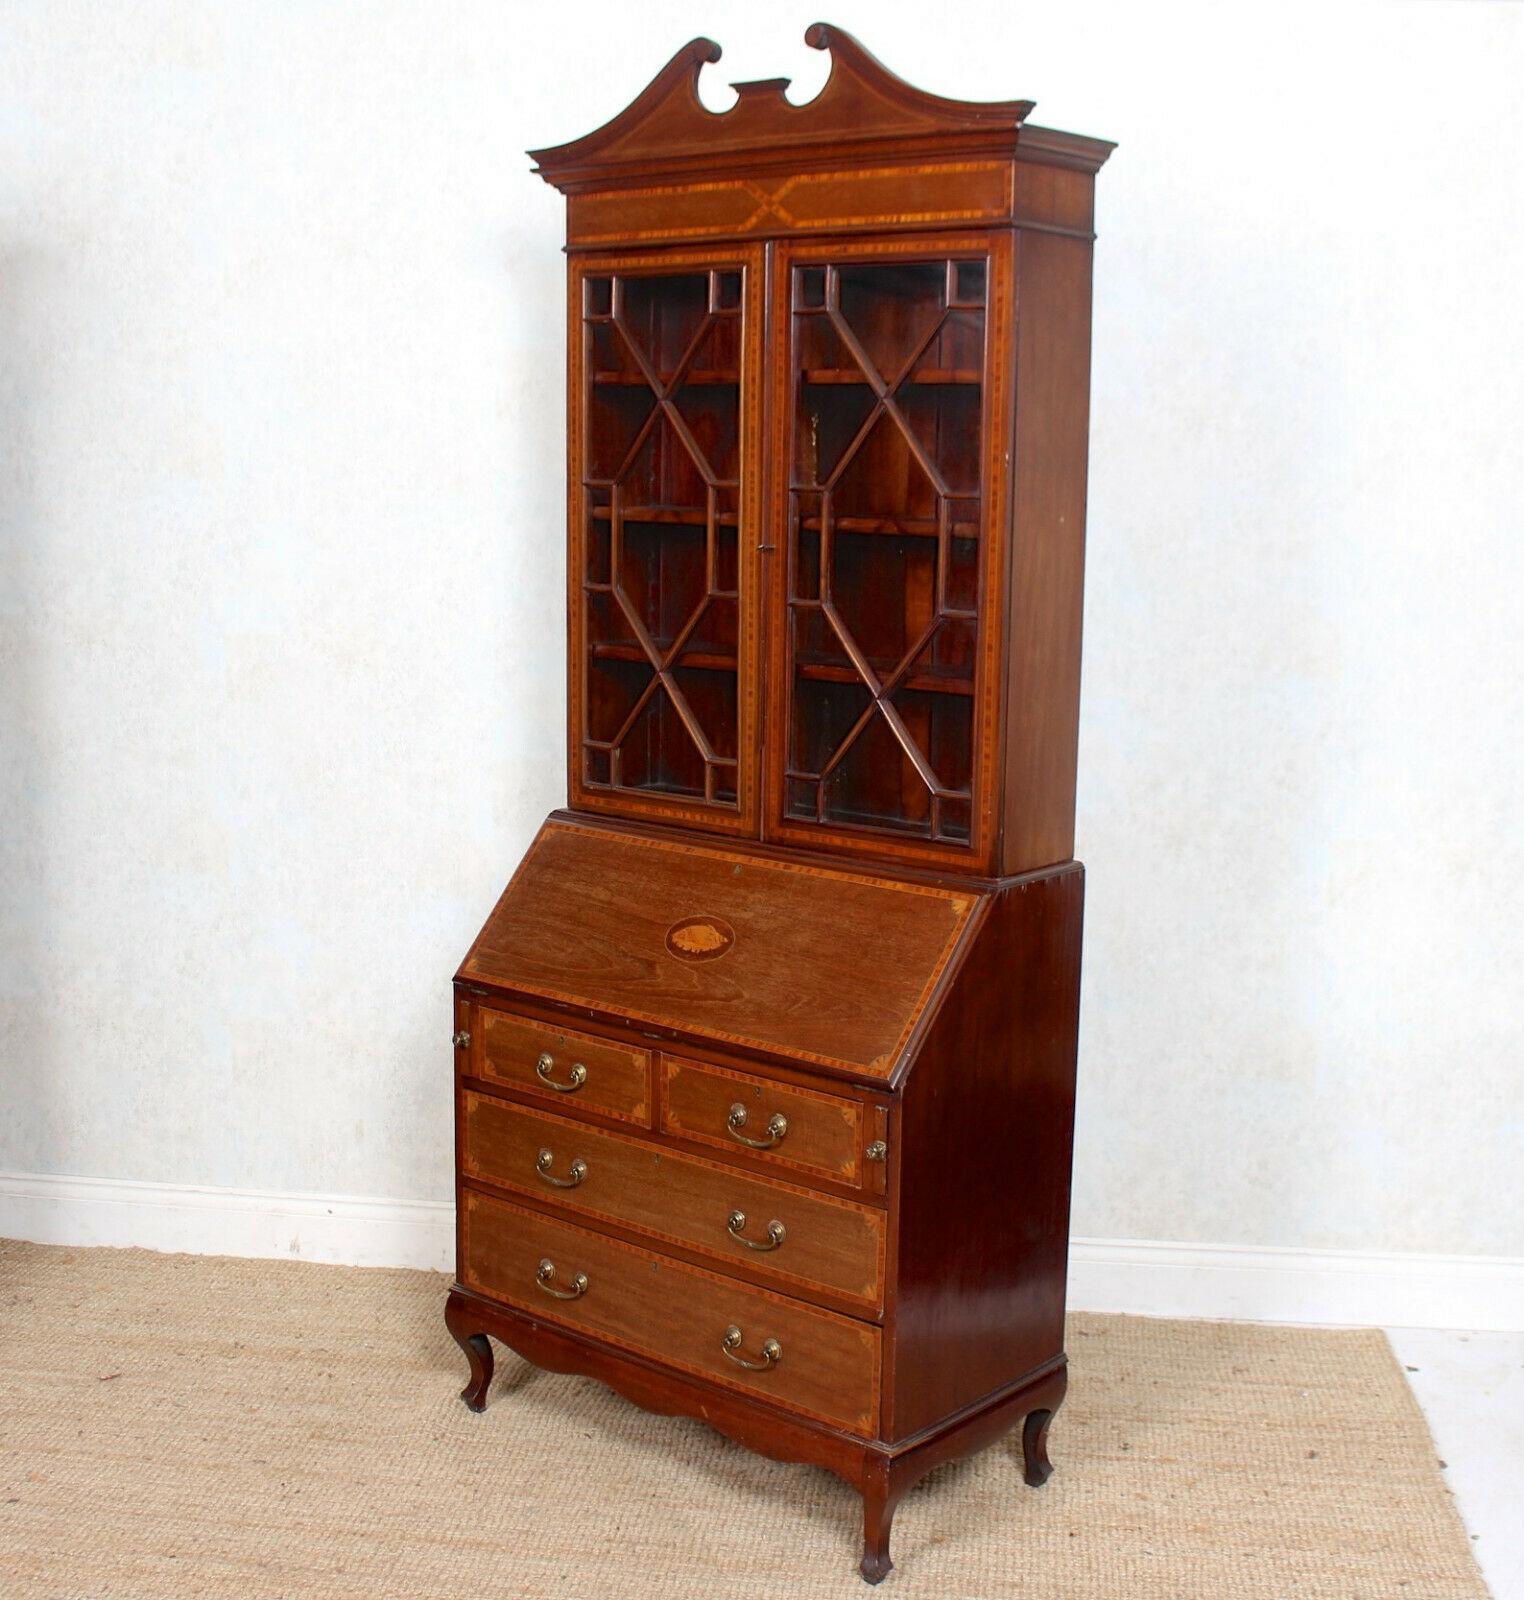 20th Century English Secretaire Bureau Bookcase Astragal Glazed Mahogany Library Cabinet For Sale